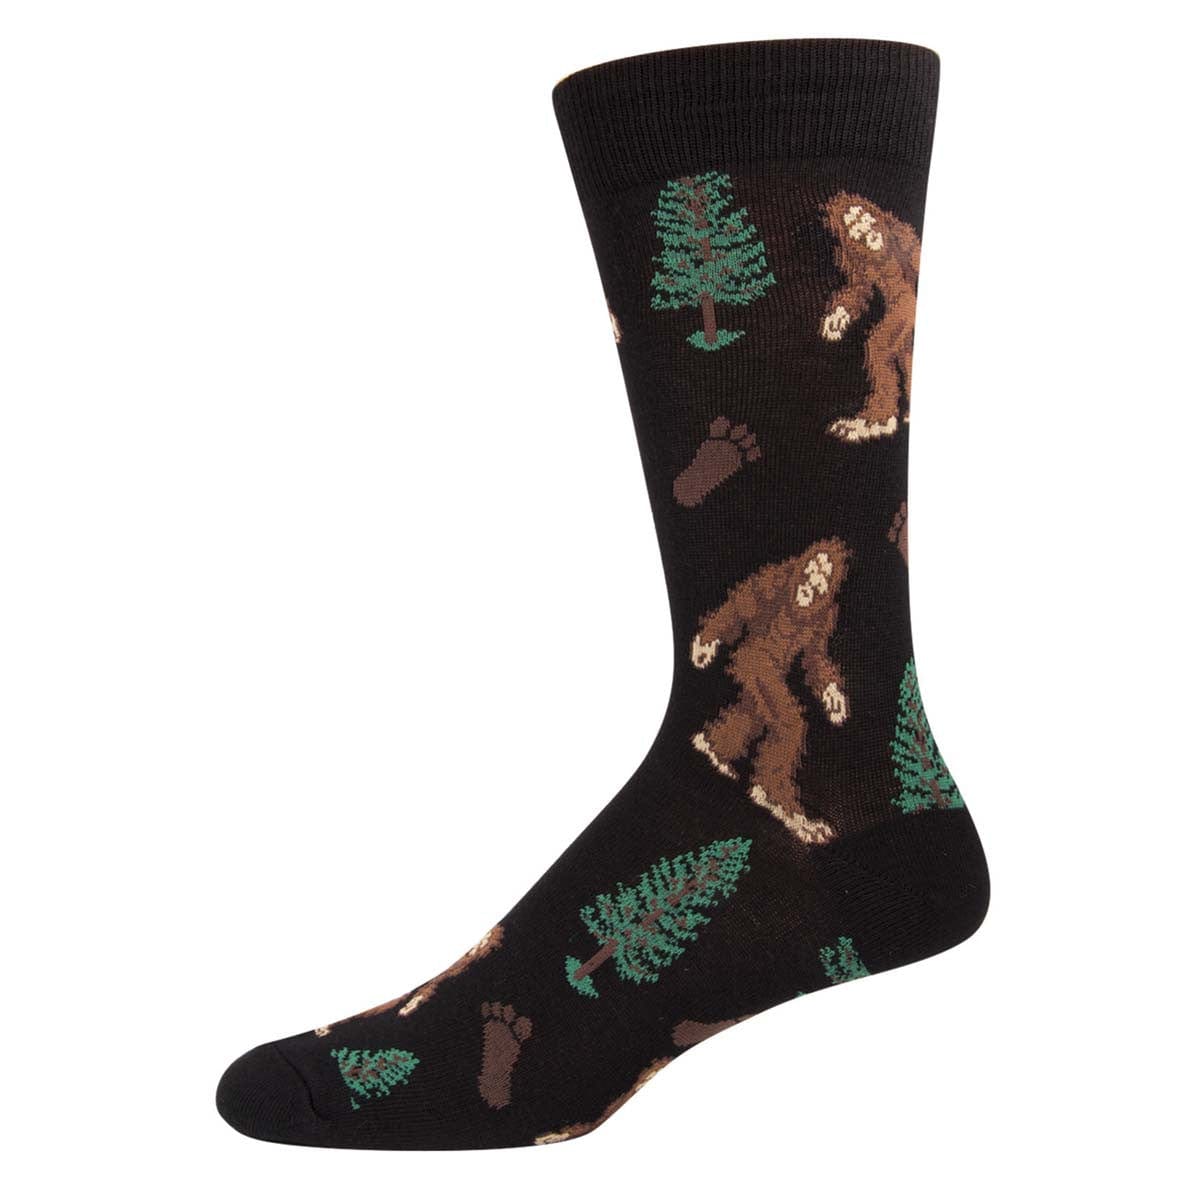 Men's Crew Socks - Multiple Designs SockSmith Sock Bigfoot / 10-13